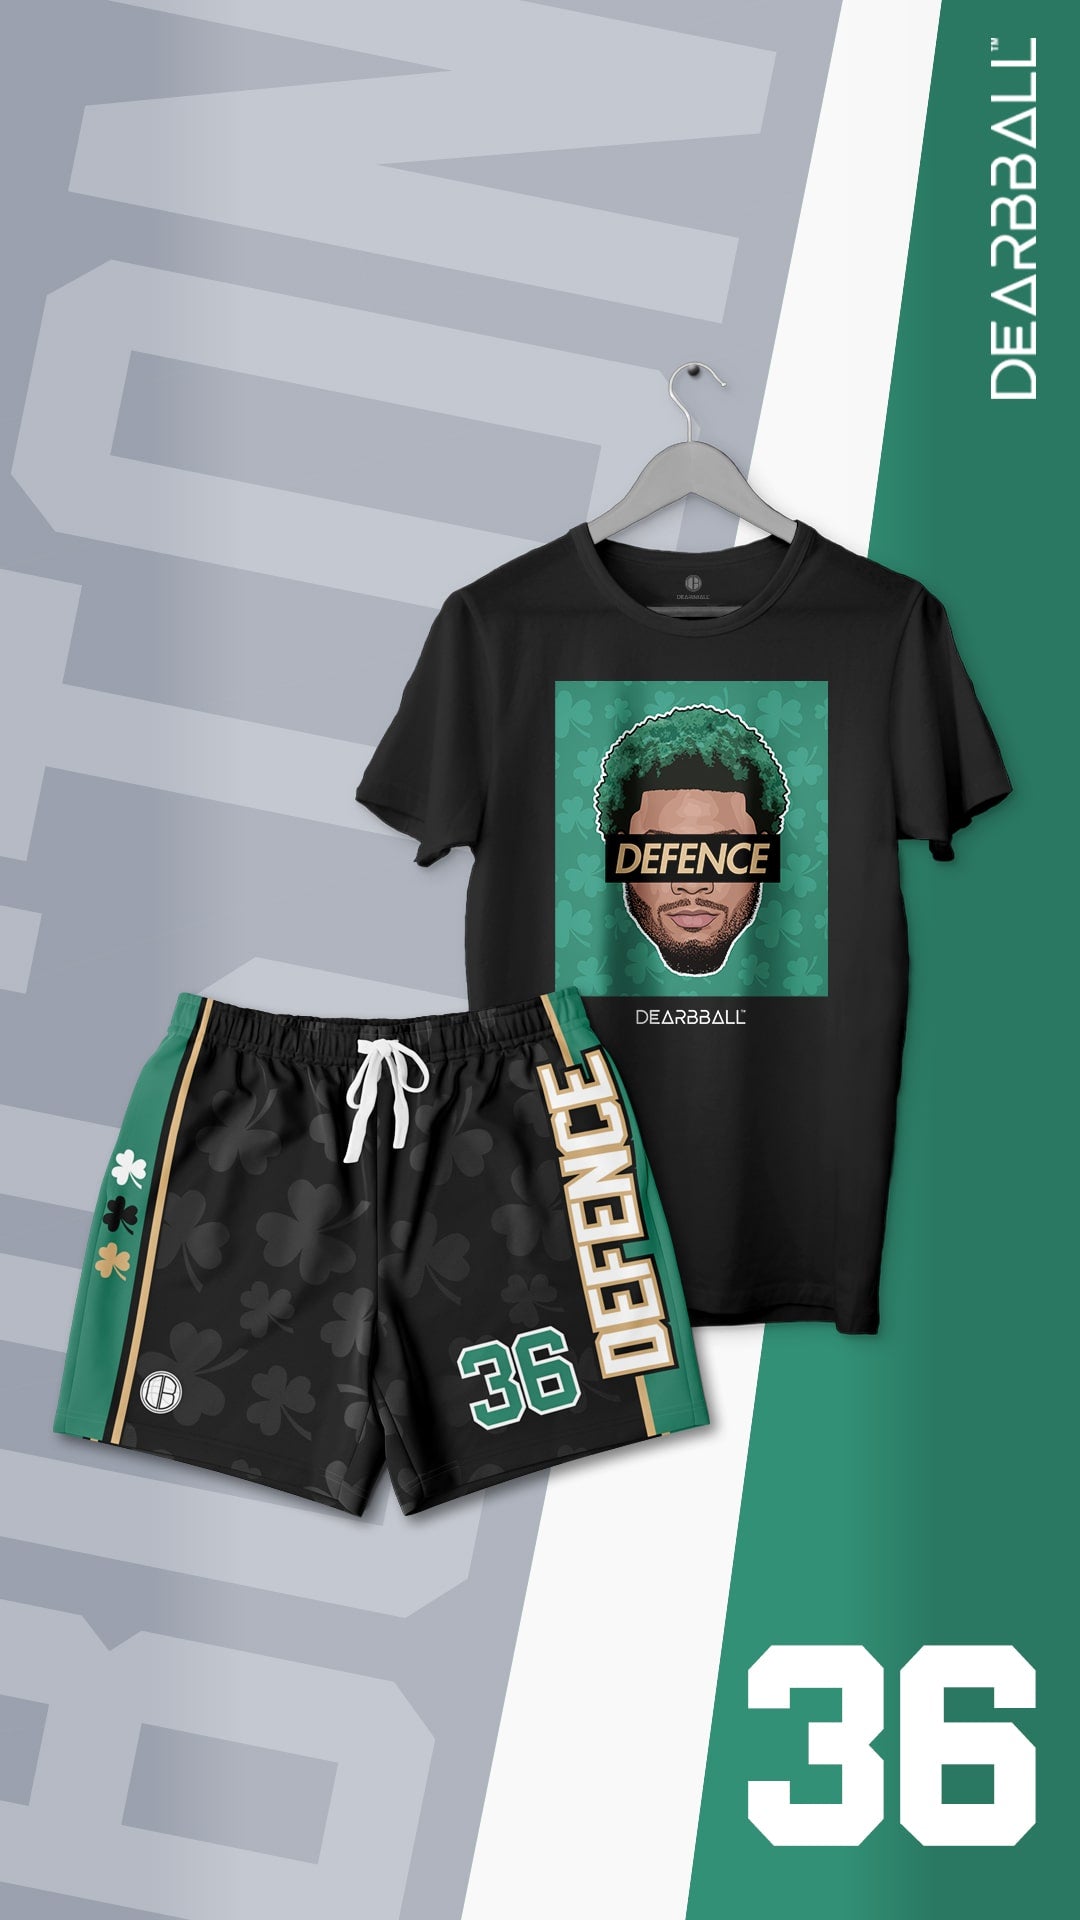 T-Shirt-Short-Marcus-Smart-Boston-Celtics-Dearbball-vetements-marque-france